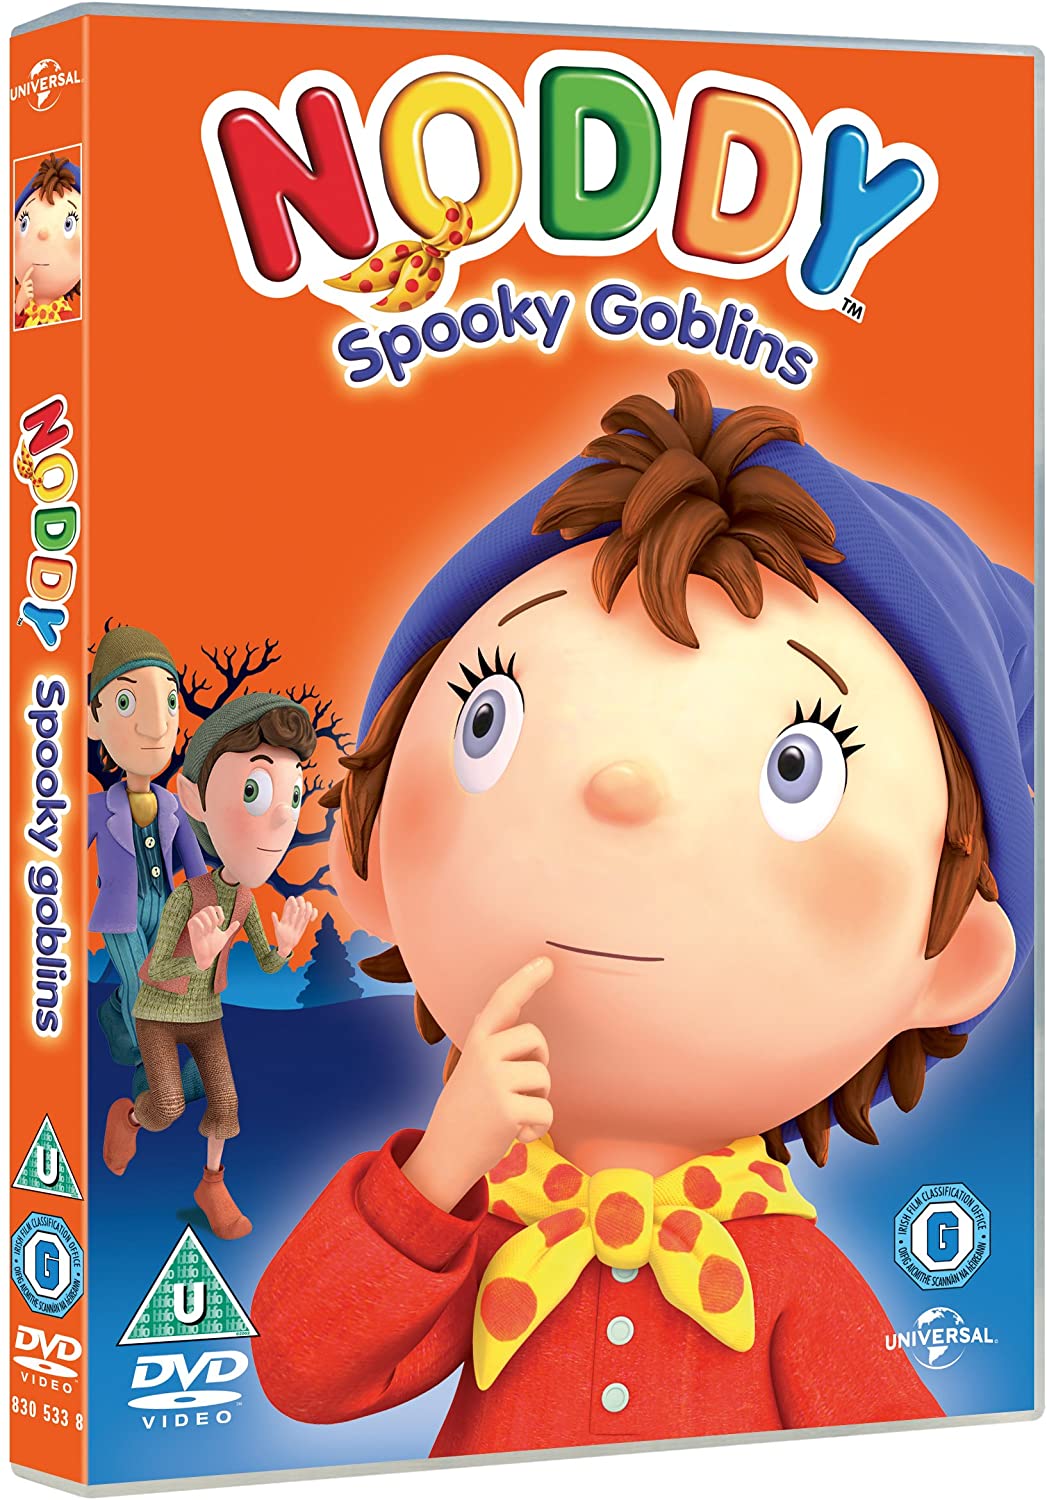 Noddy: Spooky Goblins (DVD)